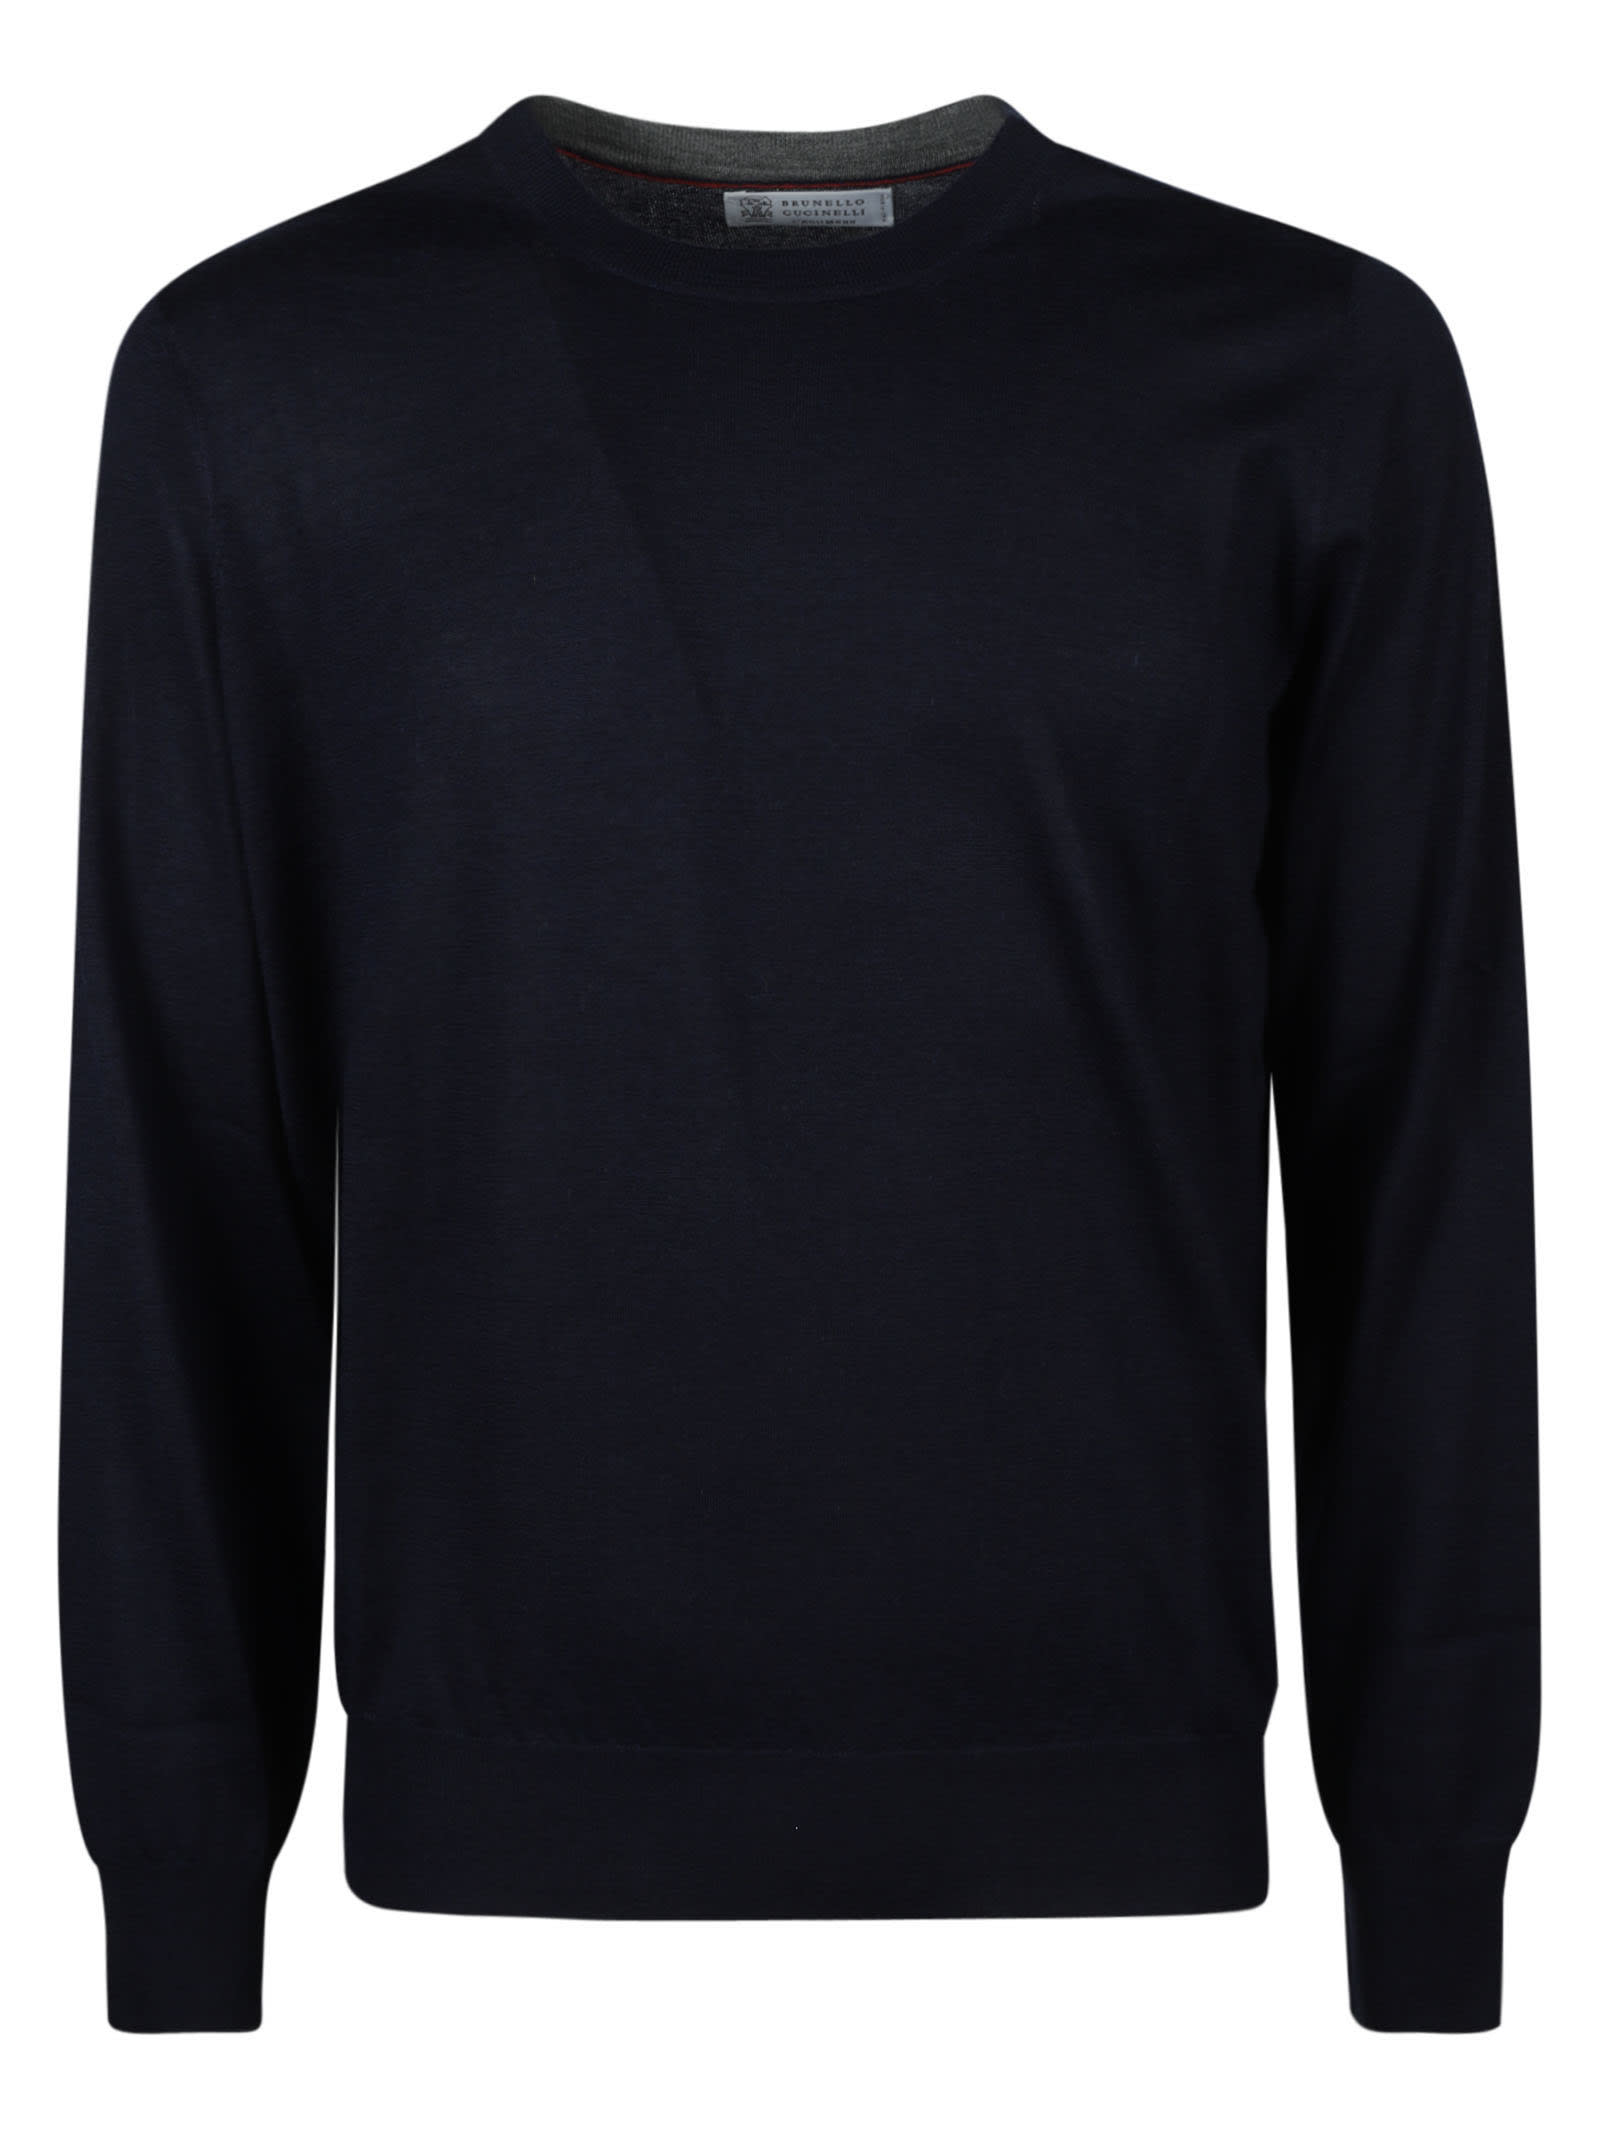 Brunello Cucinelli Plain Ribbed Sweater